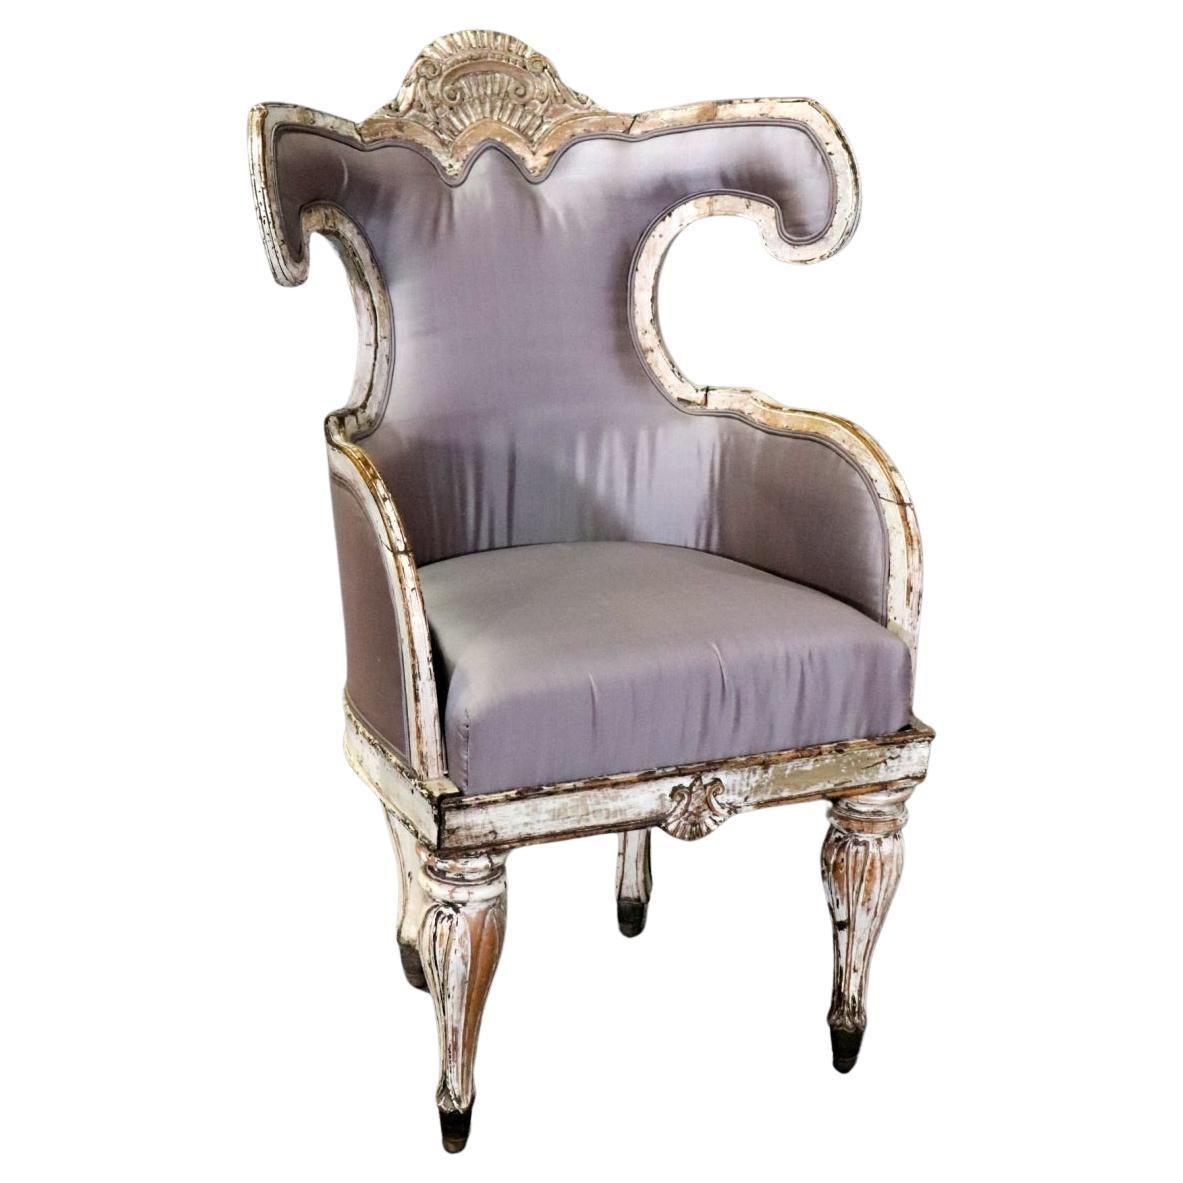 Rare Period 1740-60s era Swedish Gustavian Baroque Bergere Chair